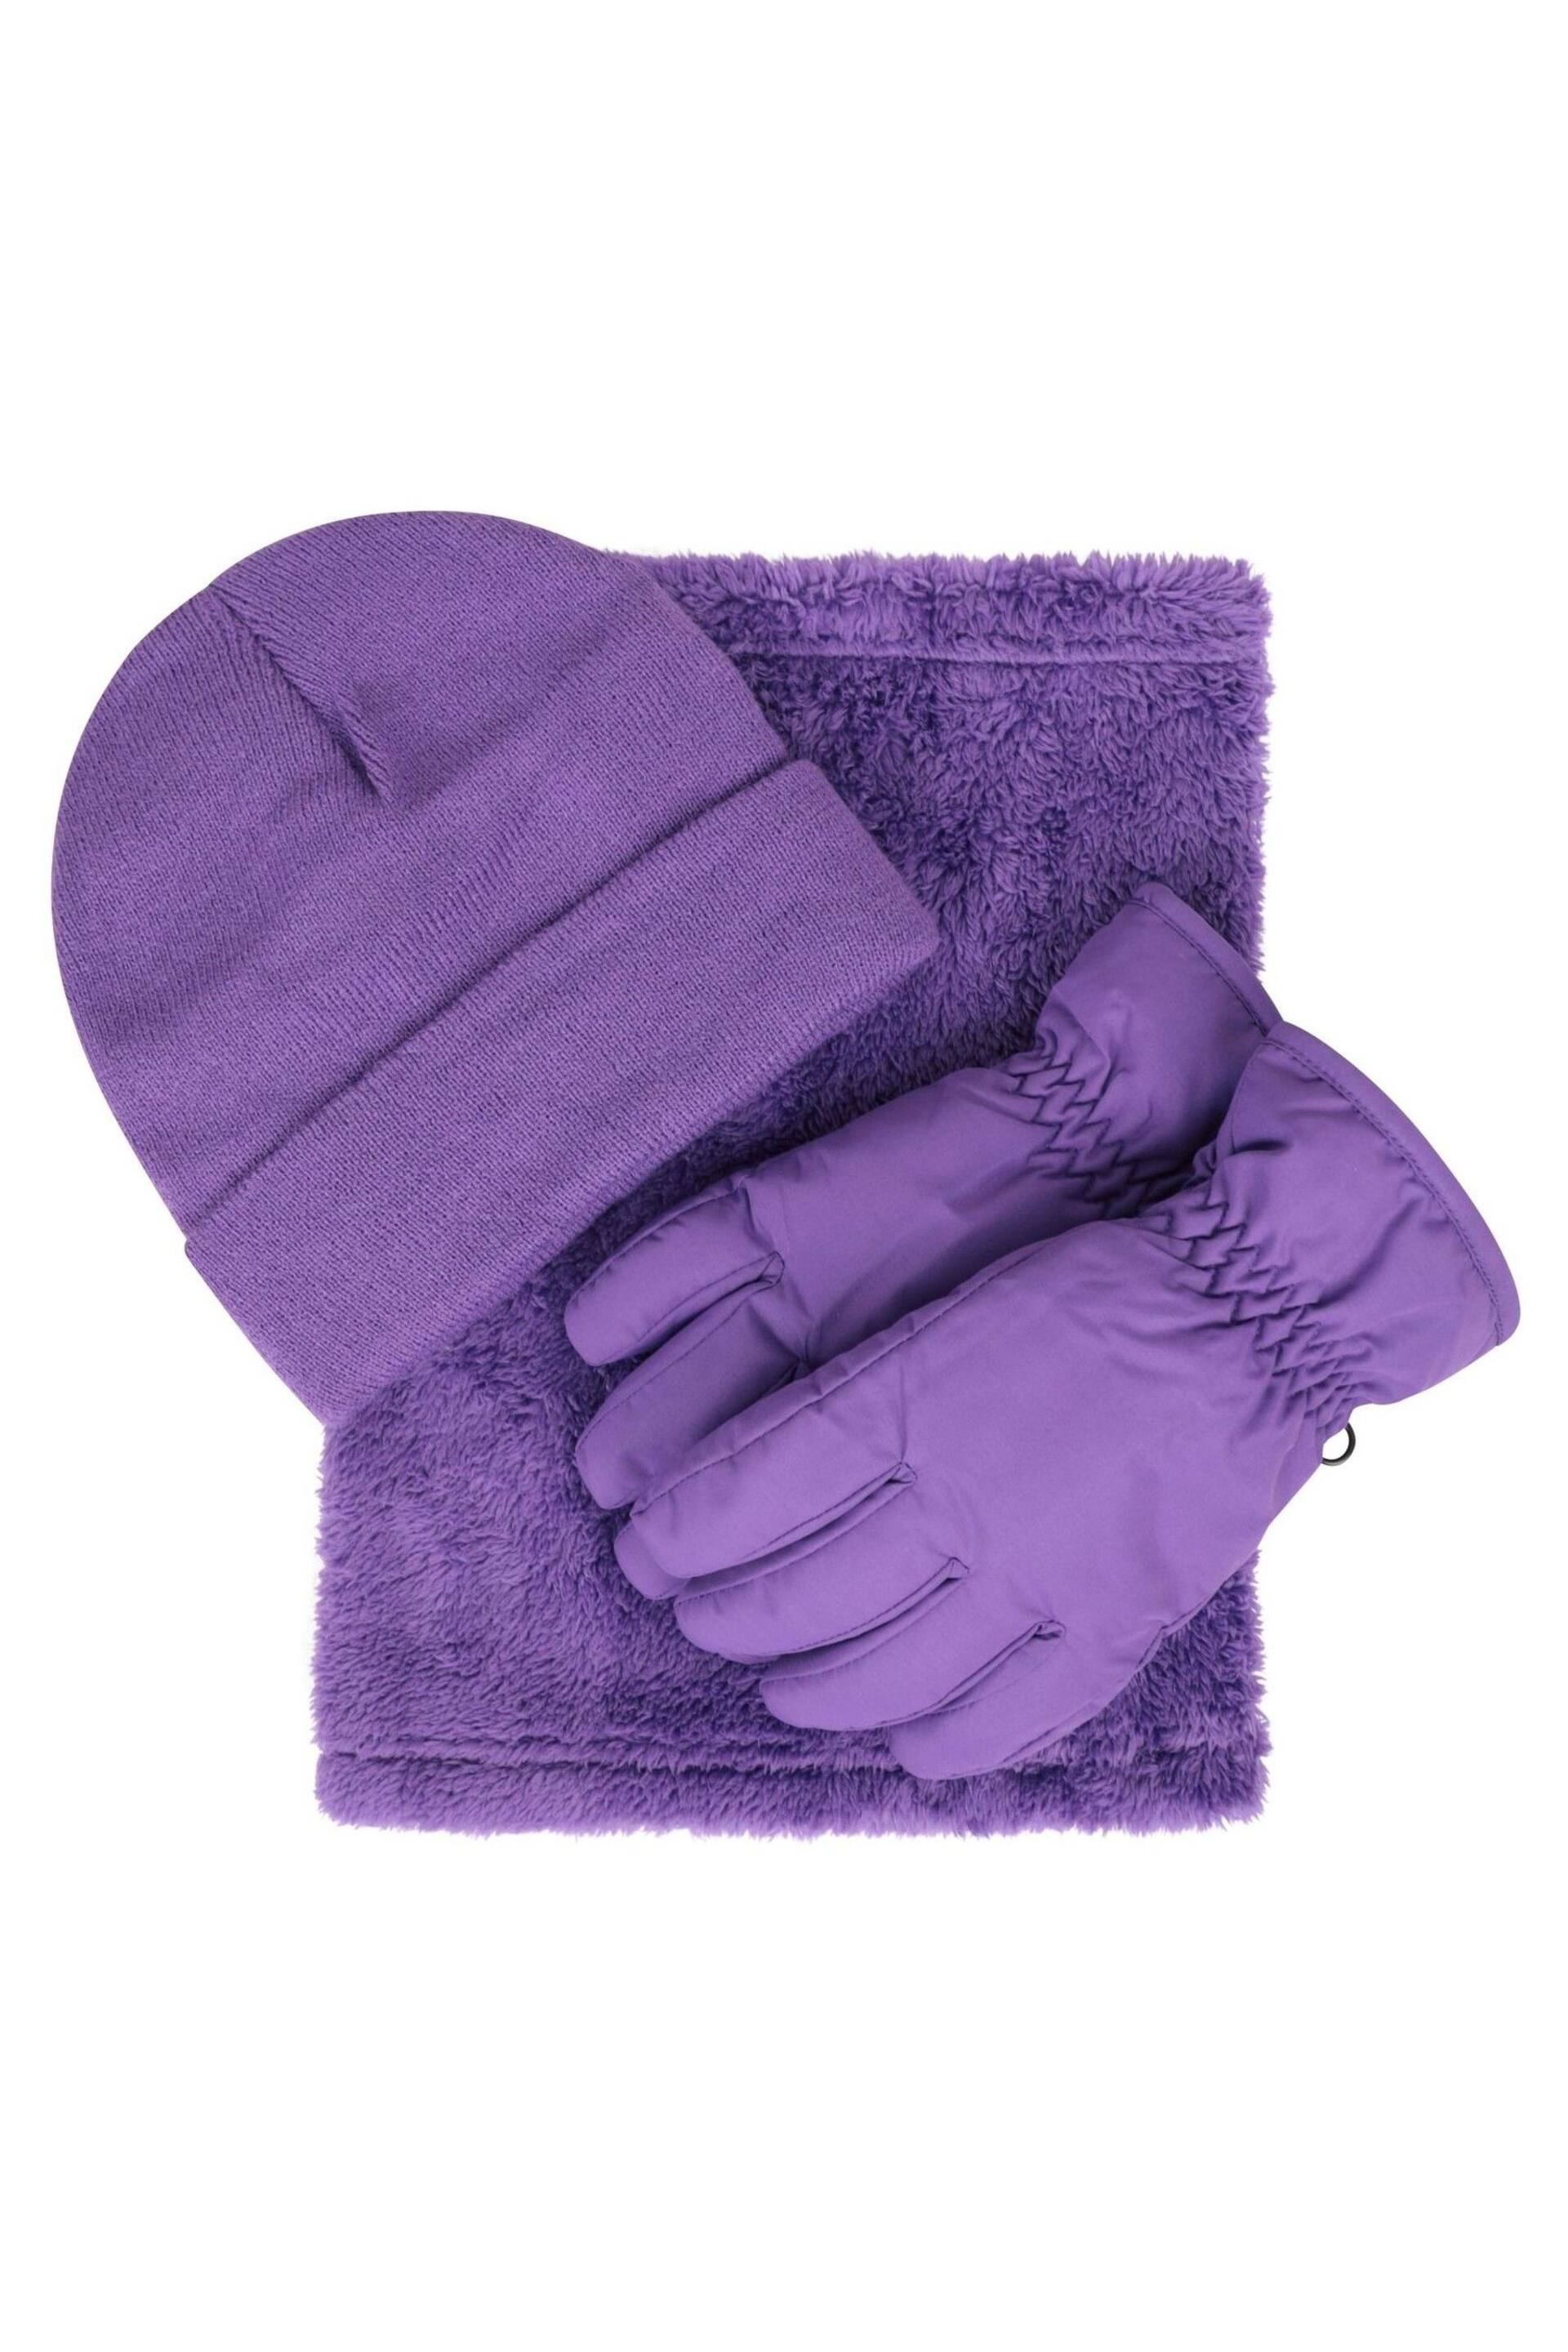 Mountain Warehouse Purple Kids Winter Accessories Set - Image 4 of 4